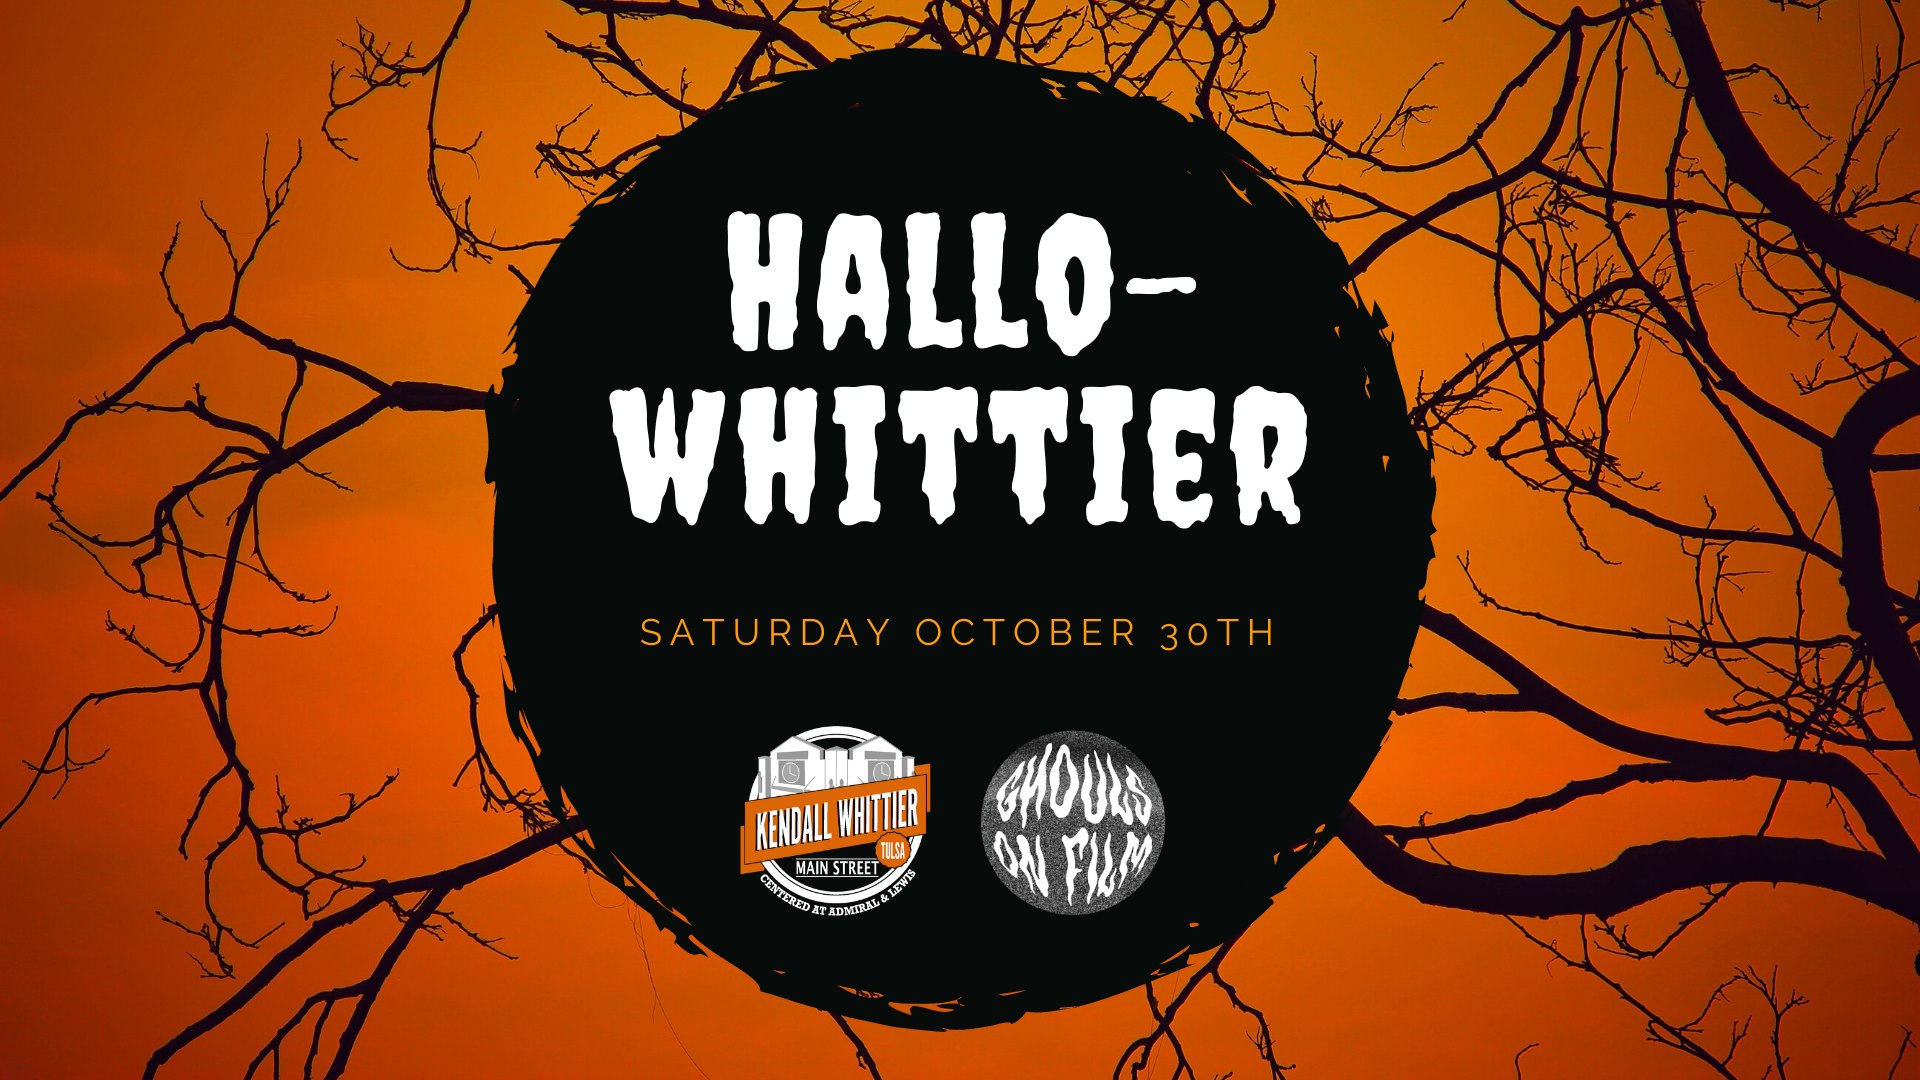 Hallo-Whittier: A Kendall Whittier Halloween Celebration